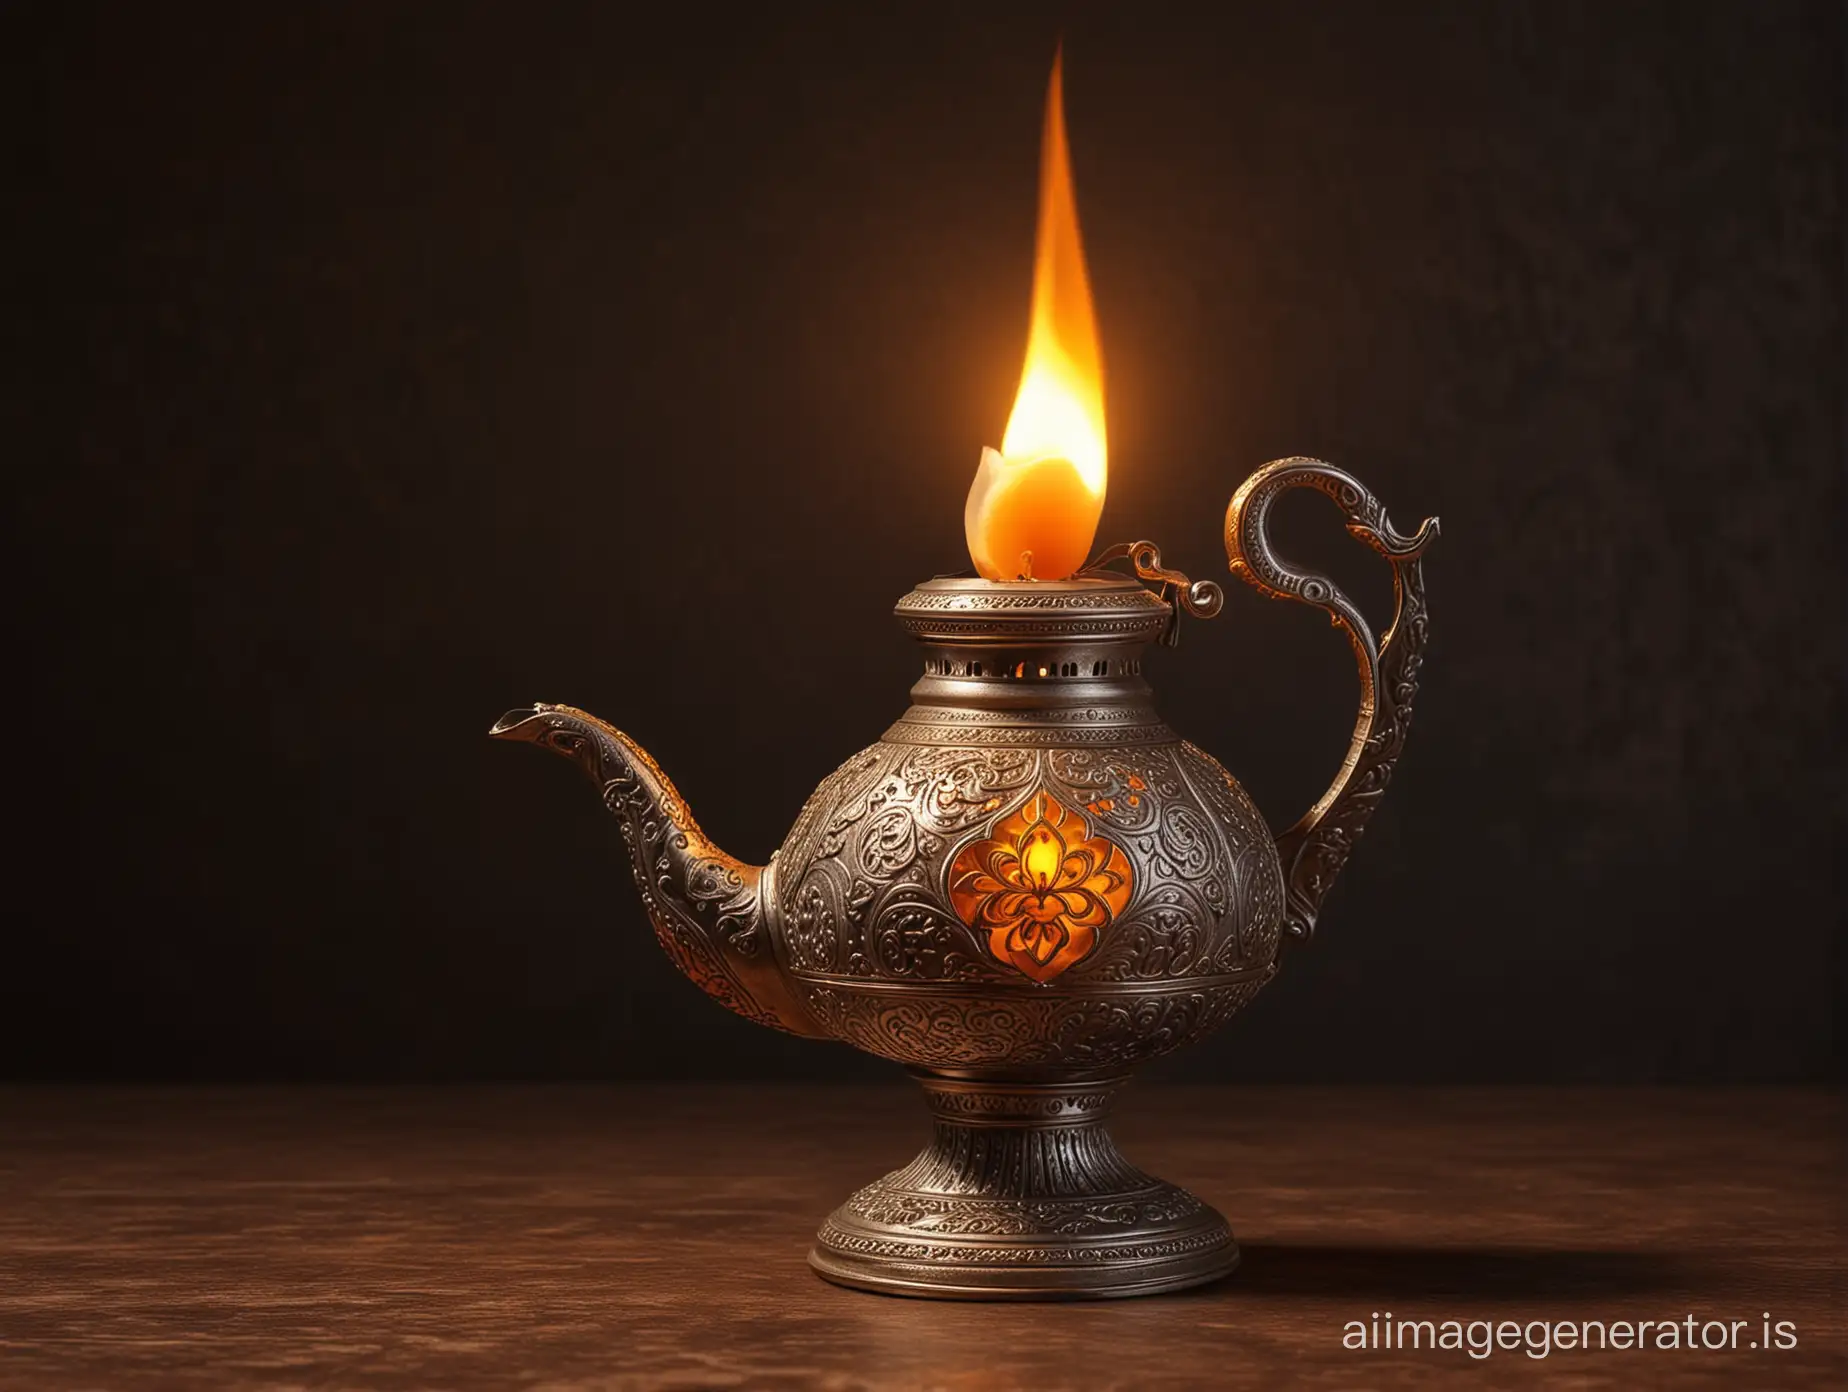 Ancient-Design-Silver-Oil-Lamp-Burning-on-Dark-Brown-Ramadan-Background